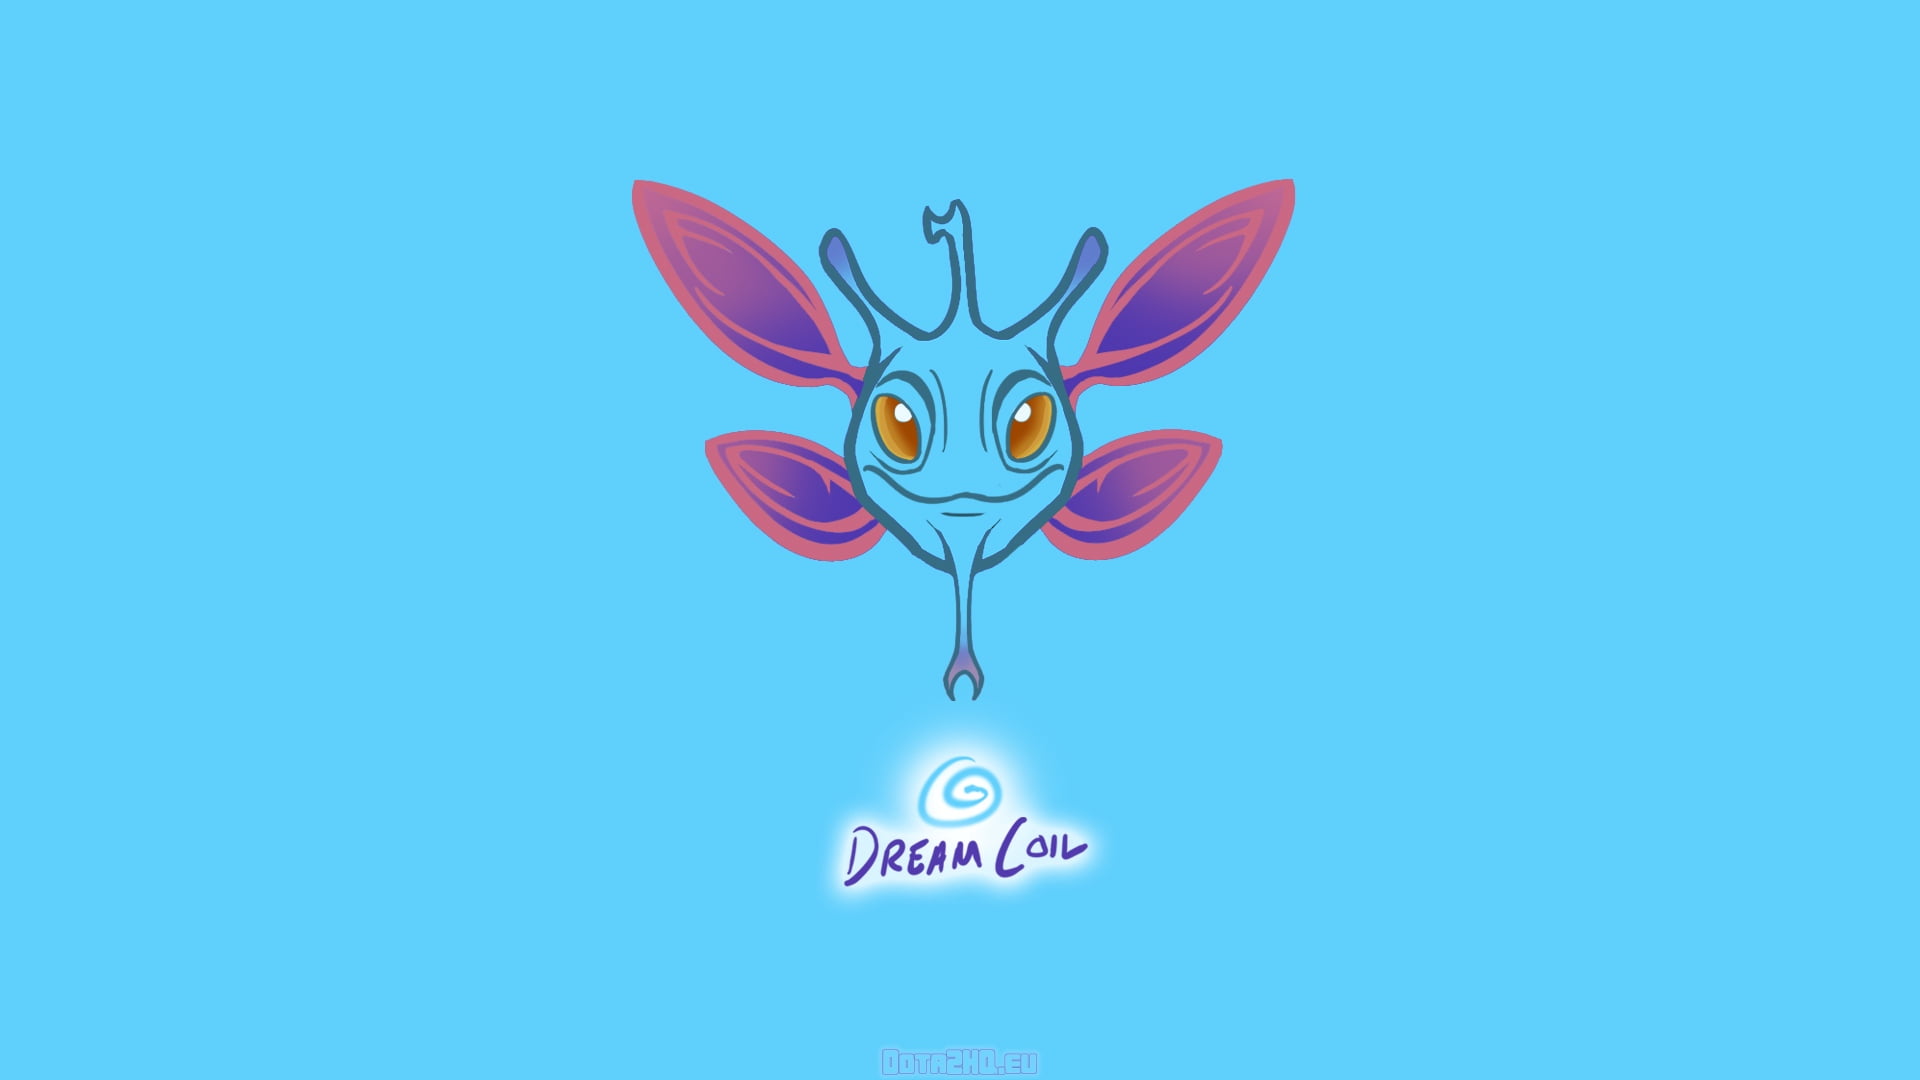 DOTA 2 Puck dream coil illustration, faerie dragon, animal, nature